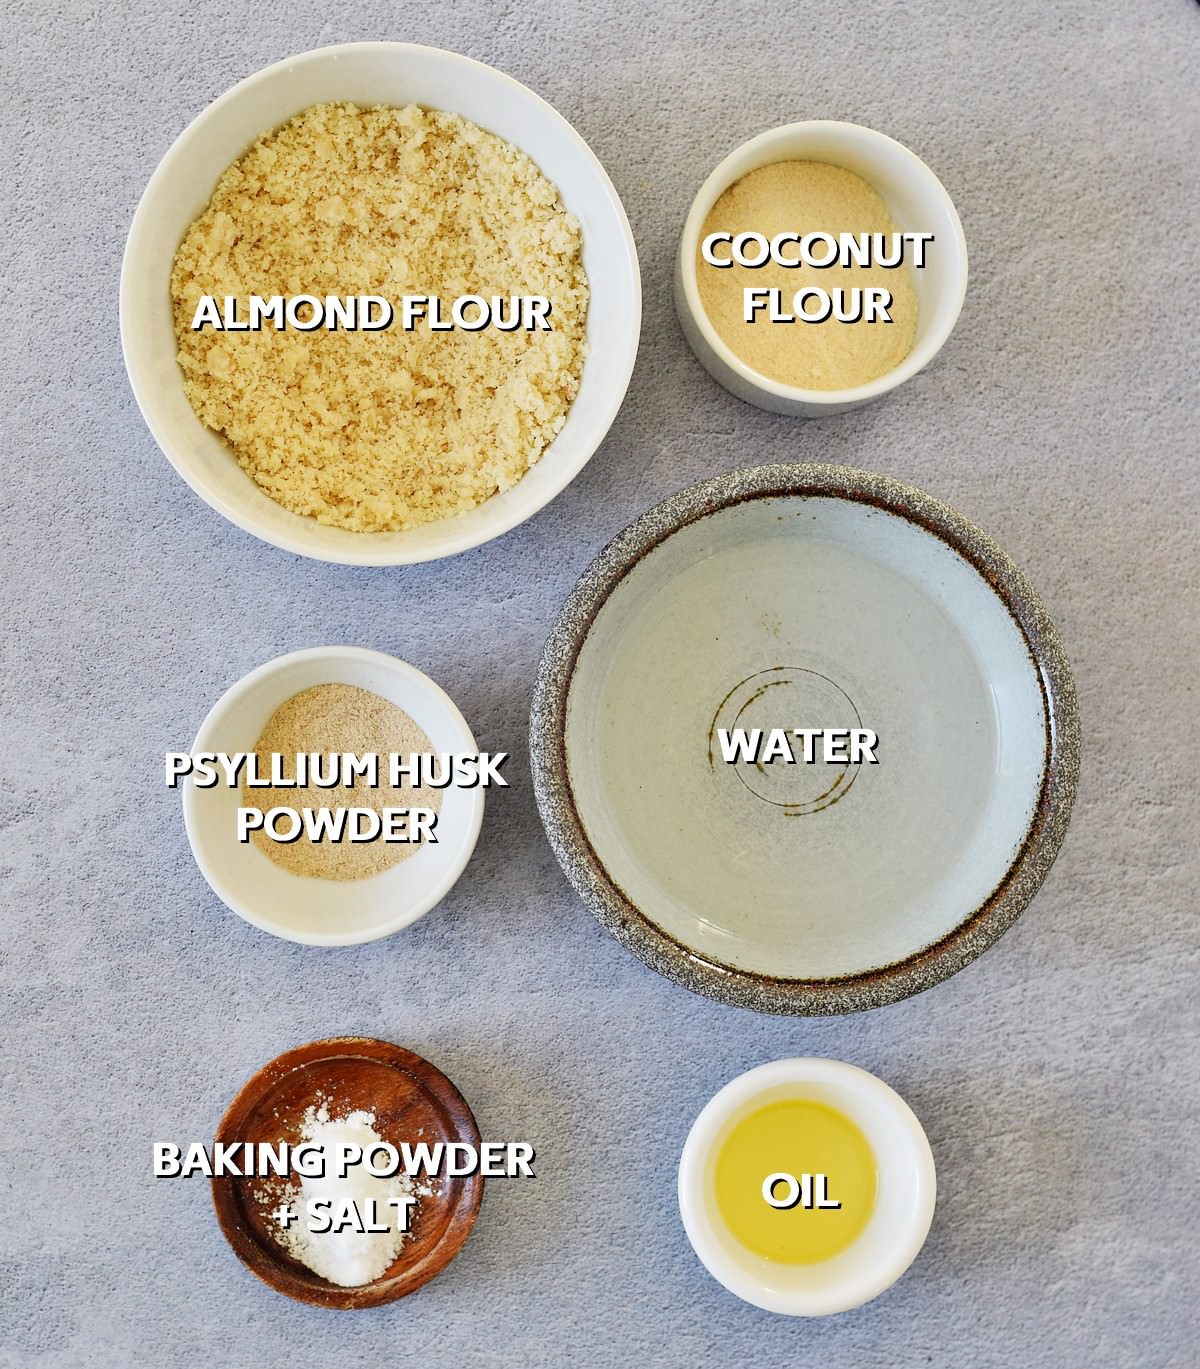 Ingredients for keti almond flour tortillas